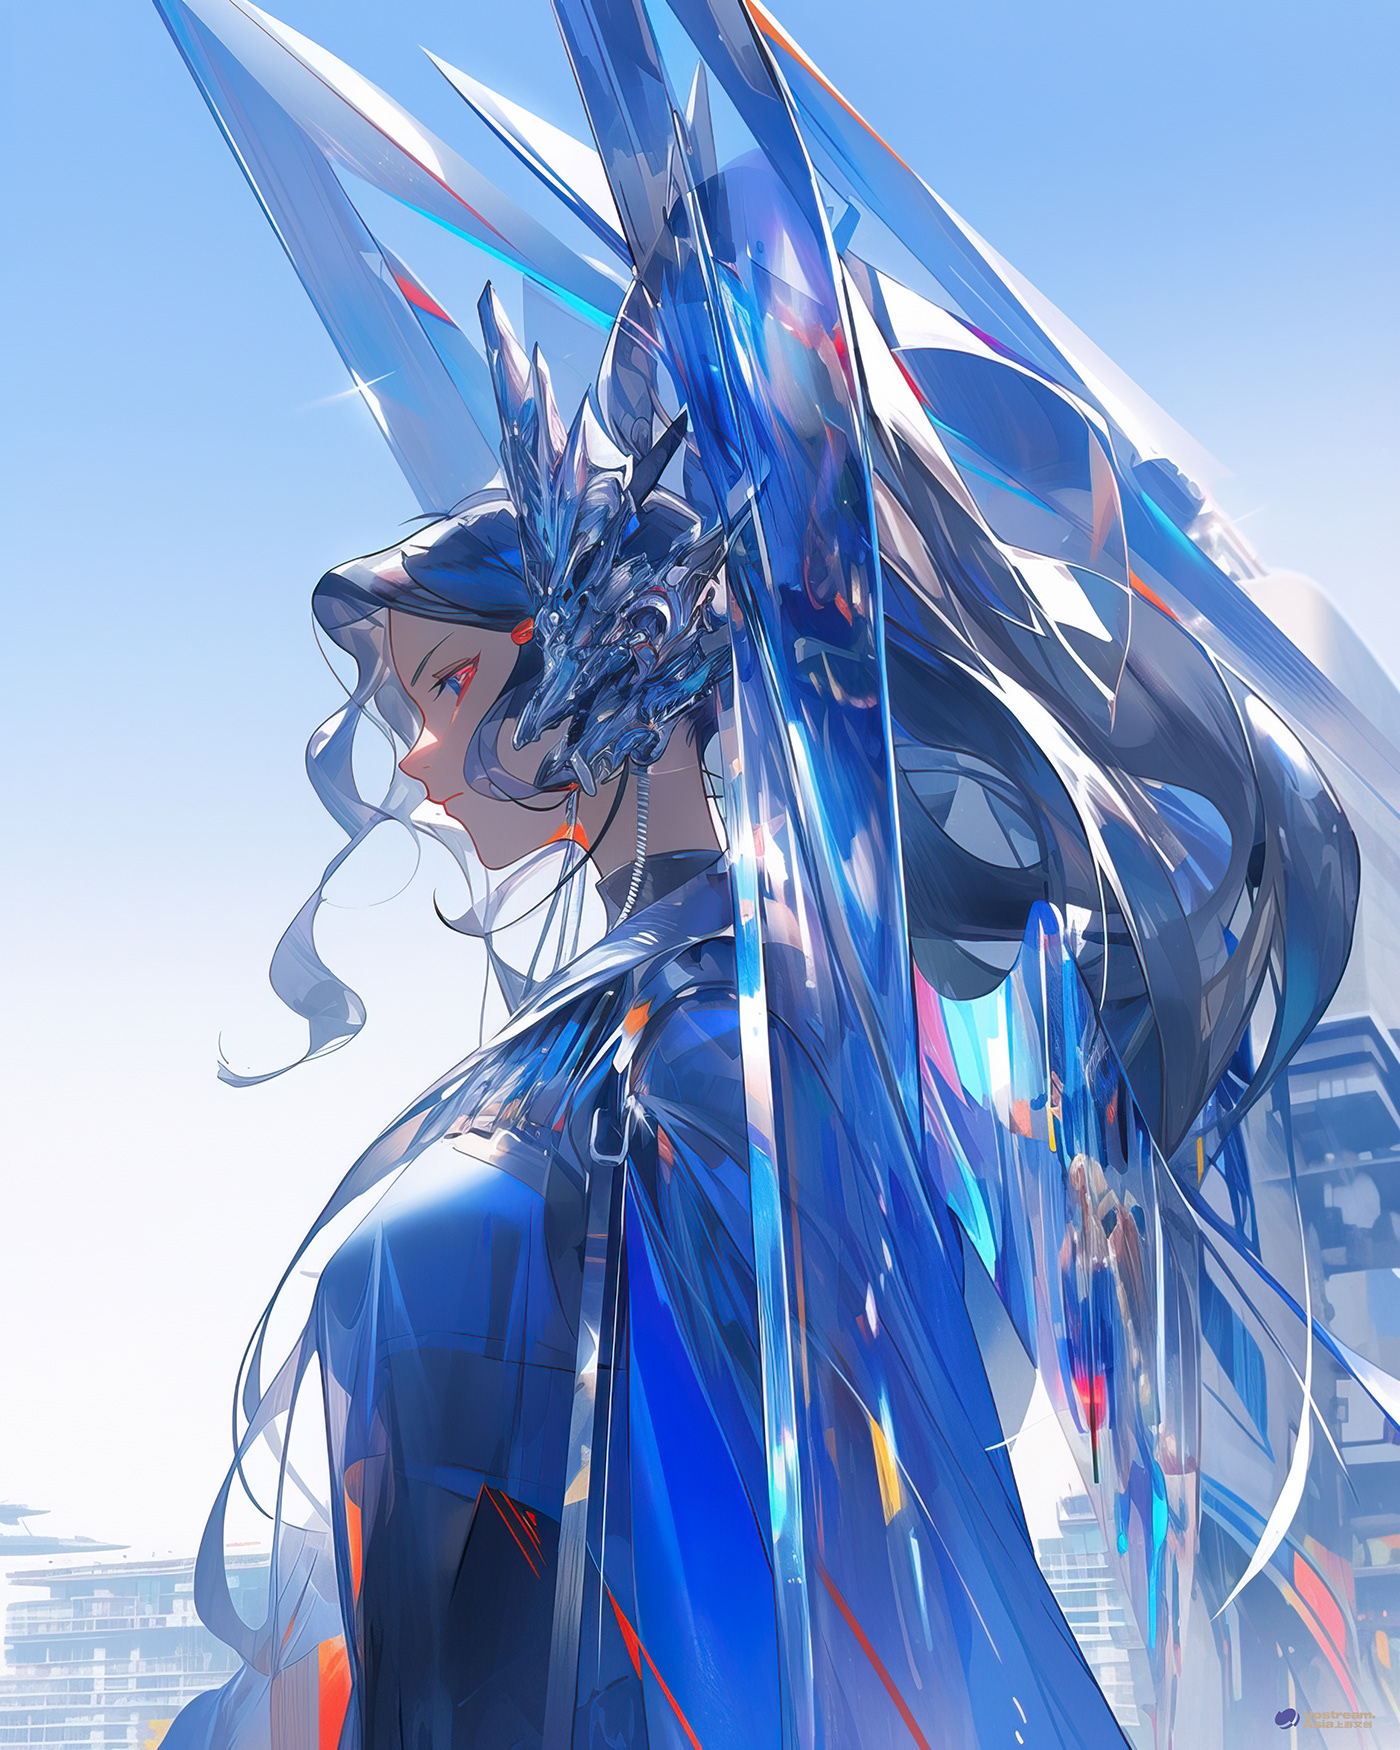 anime FUTURISM robotics Technology Cyberpunk Futurisim speculativefiction cg artwork digital illustration concept art